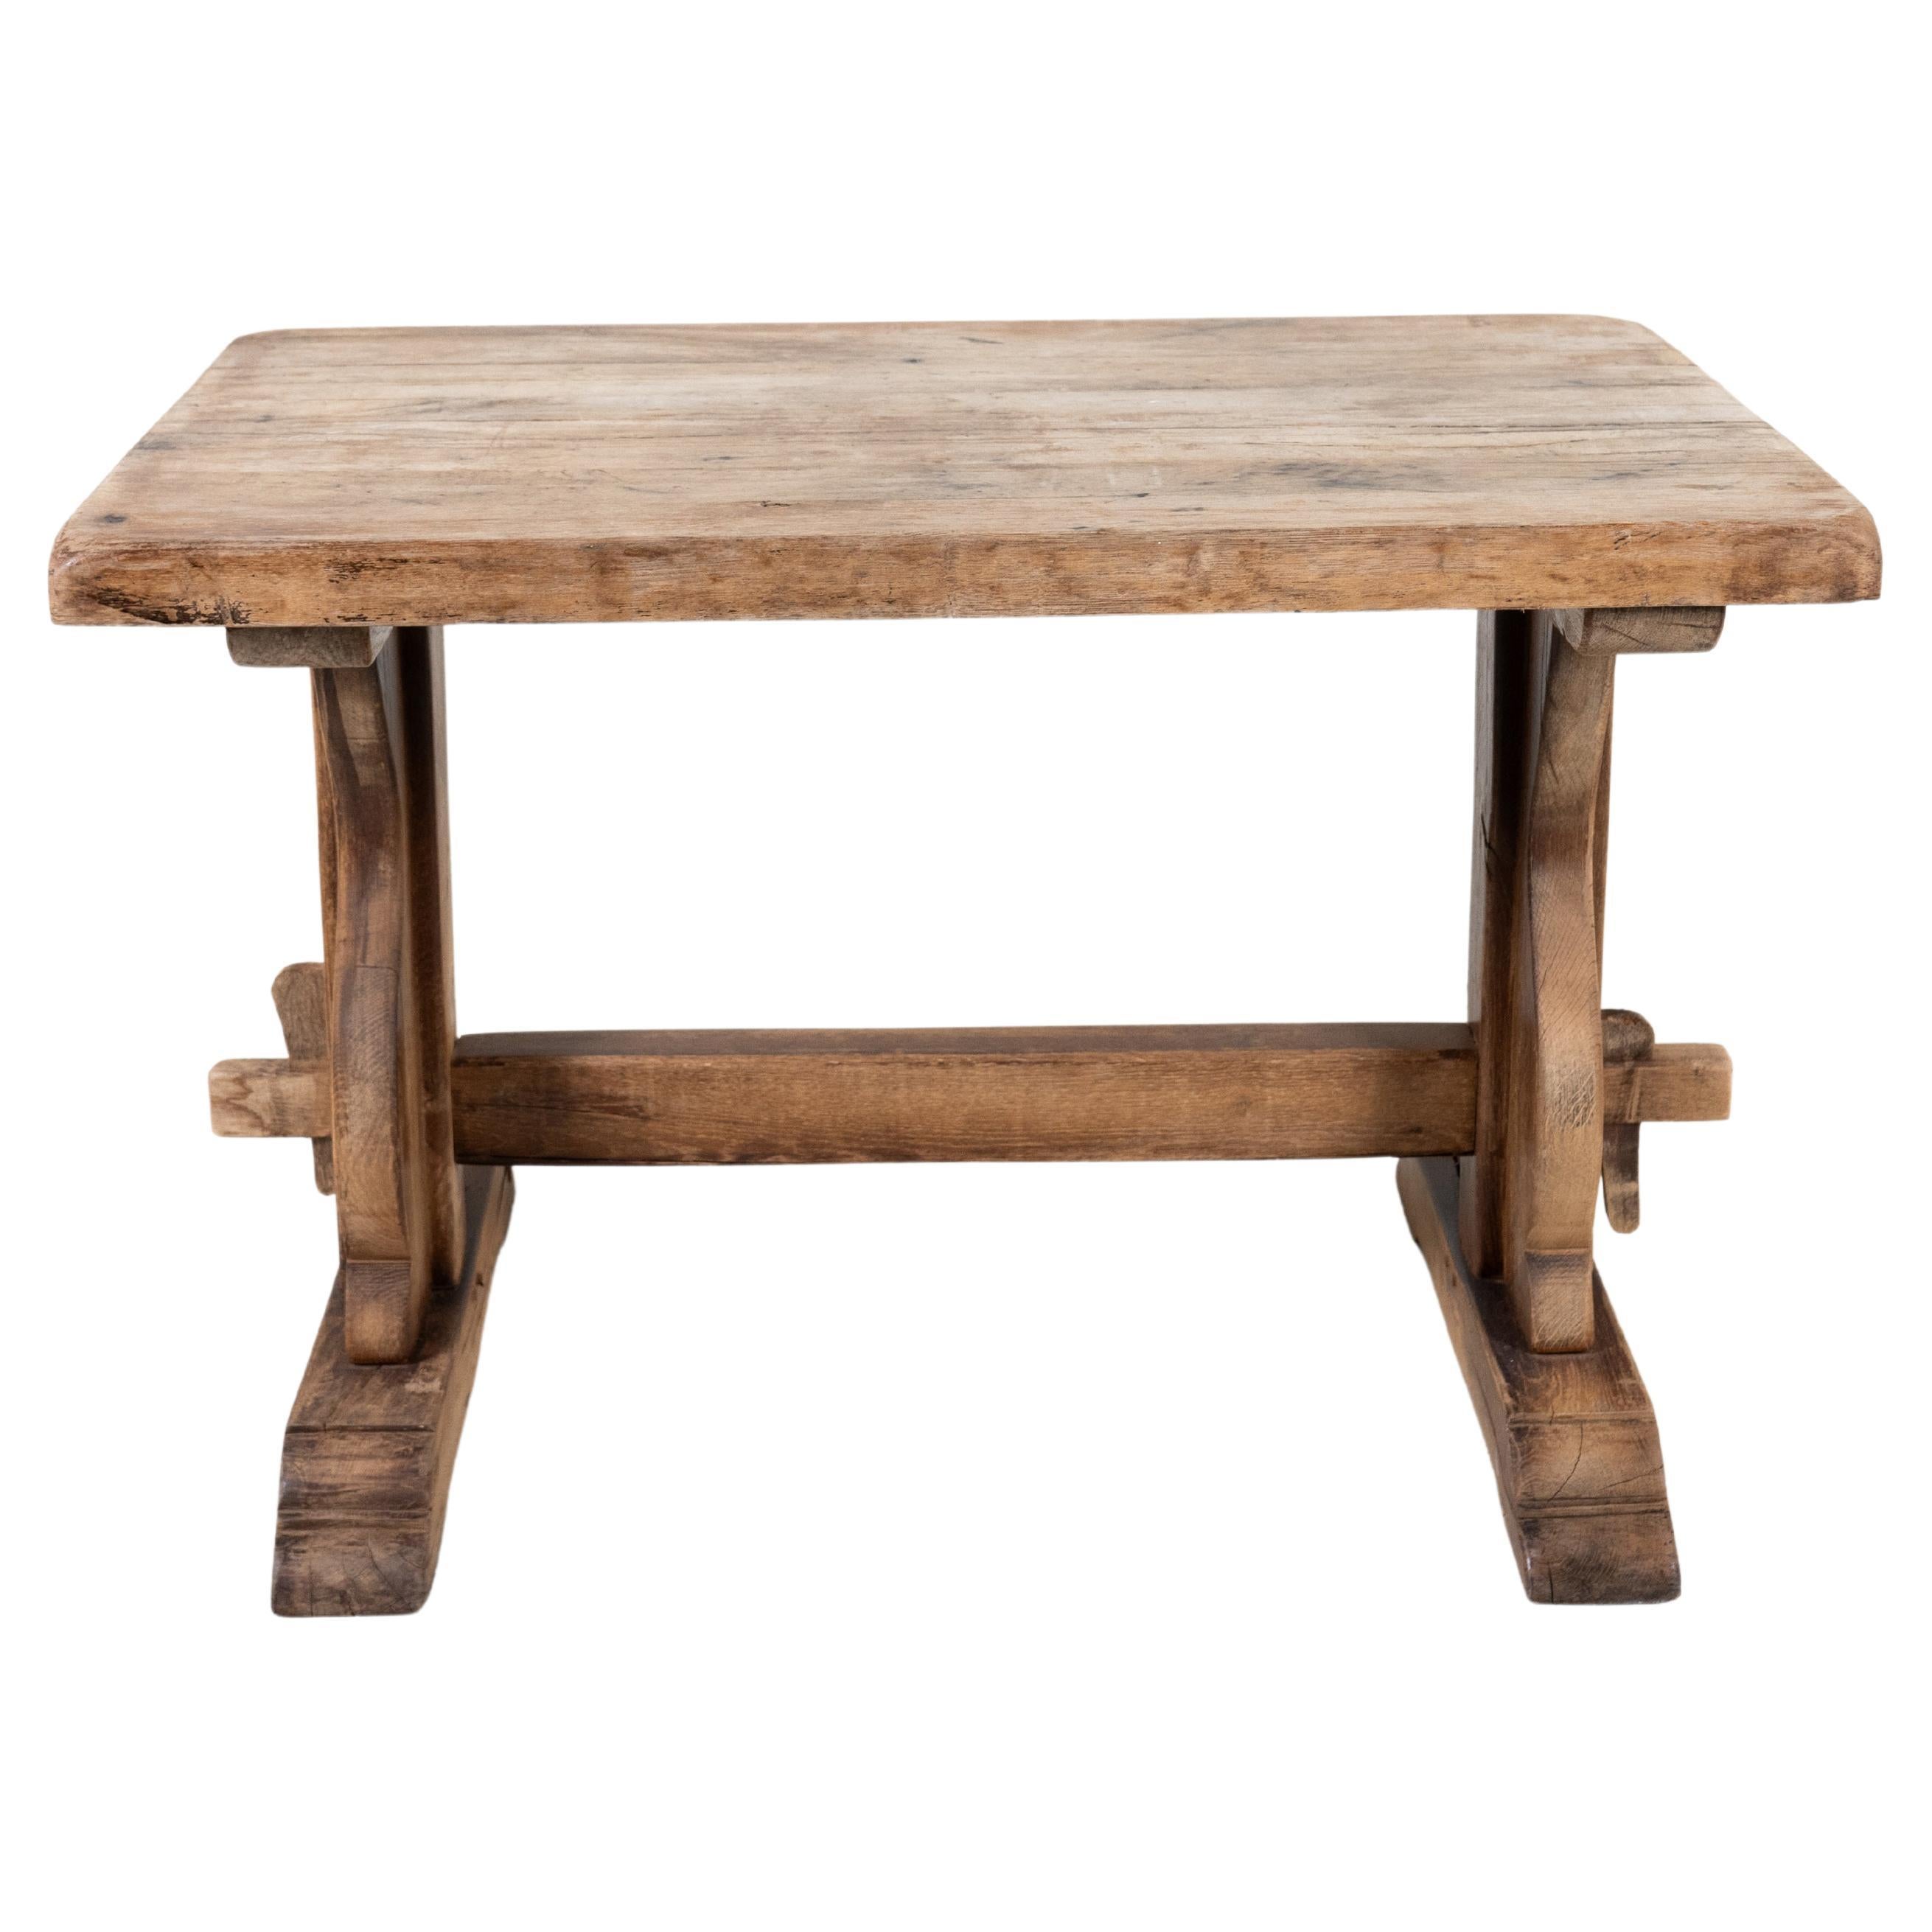 An Oak Wood Trestle Table, France c.1900